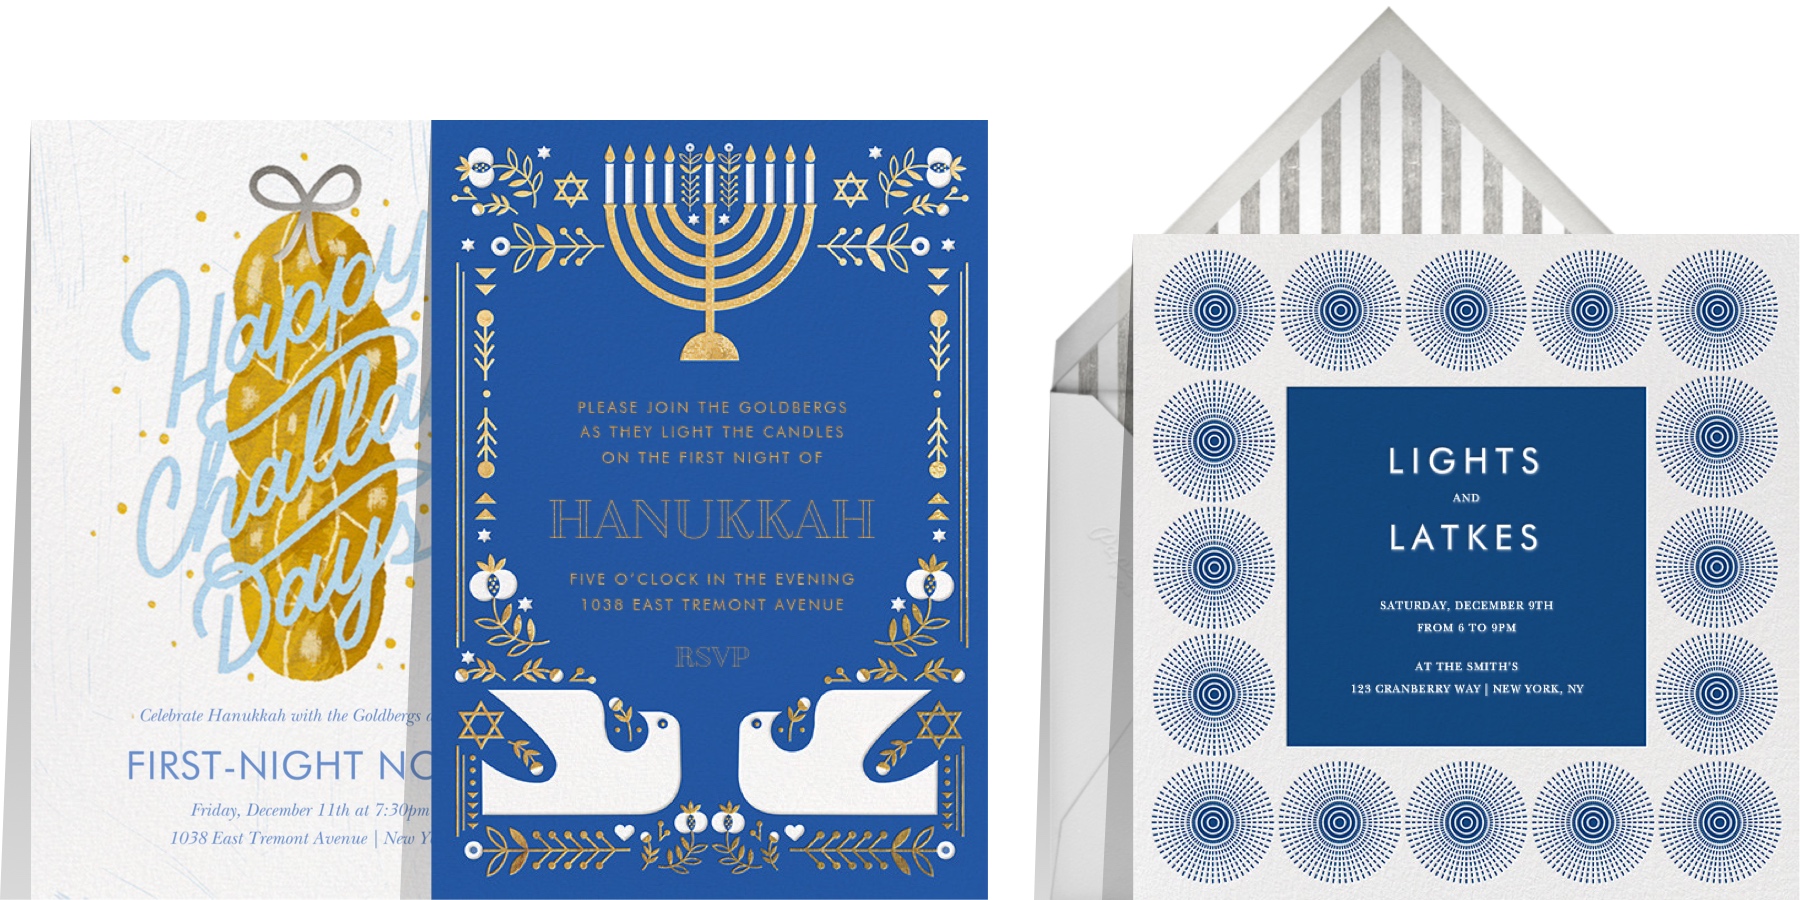 Hanukkah invitations by Paperless Post